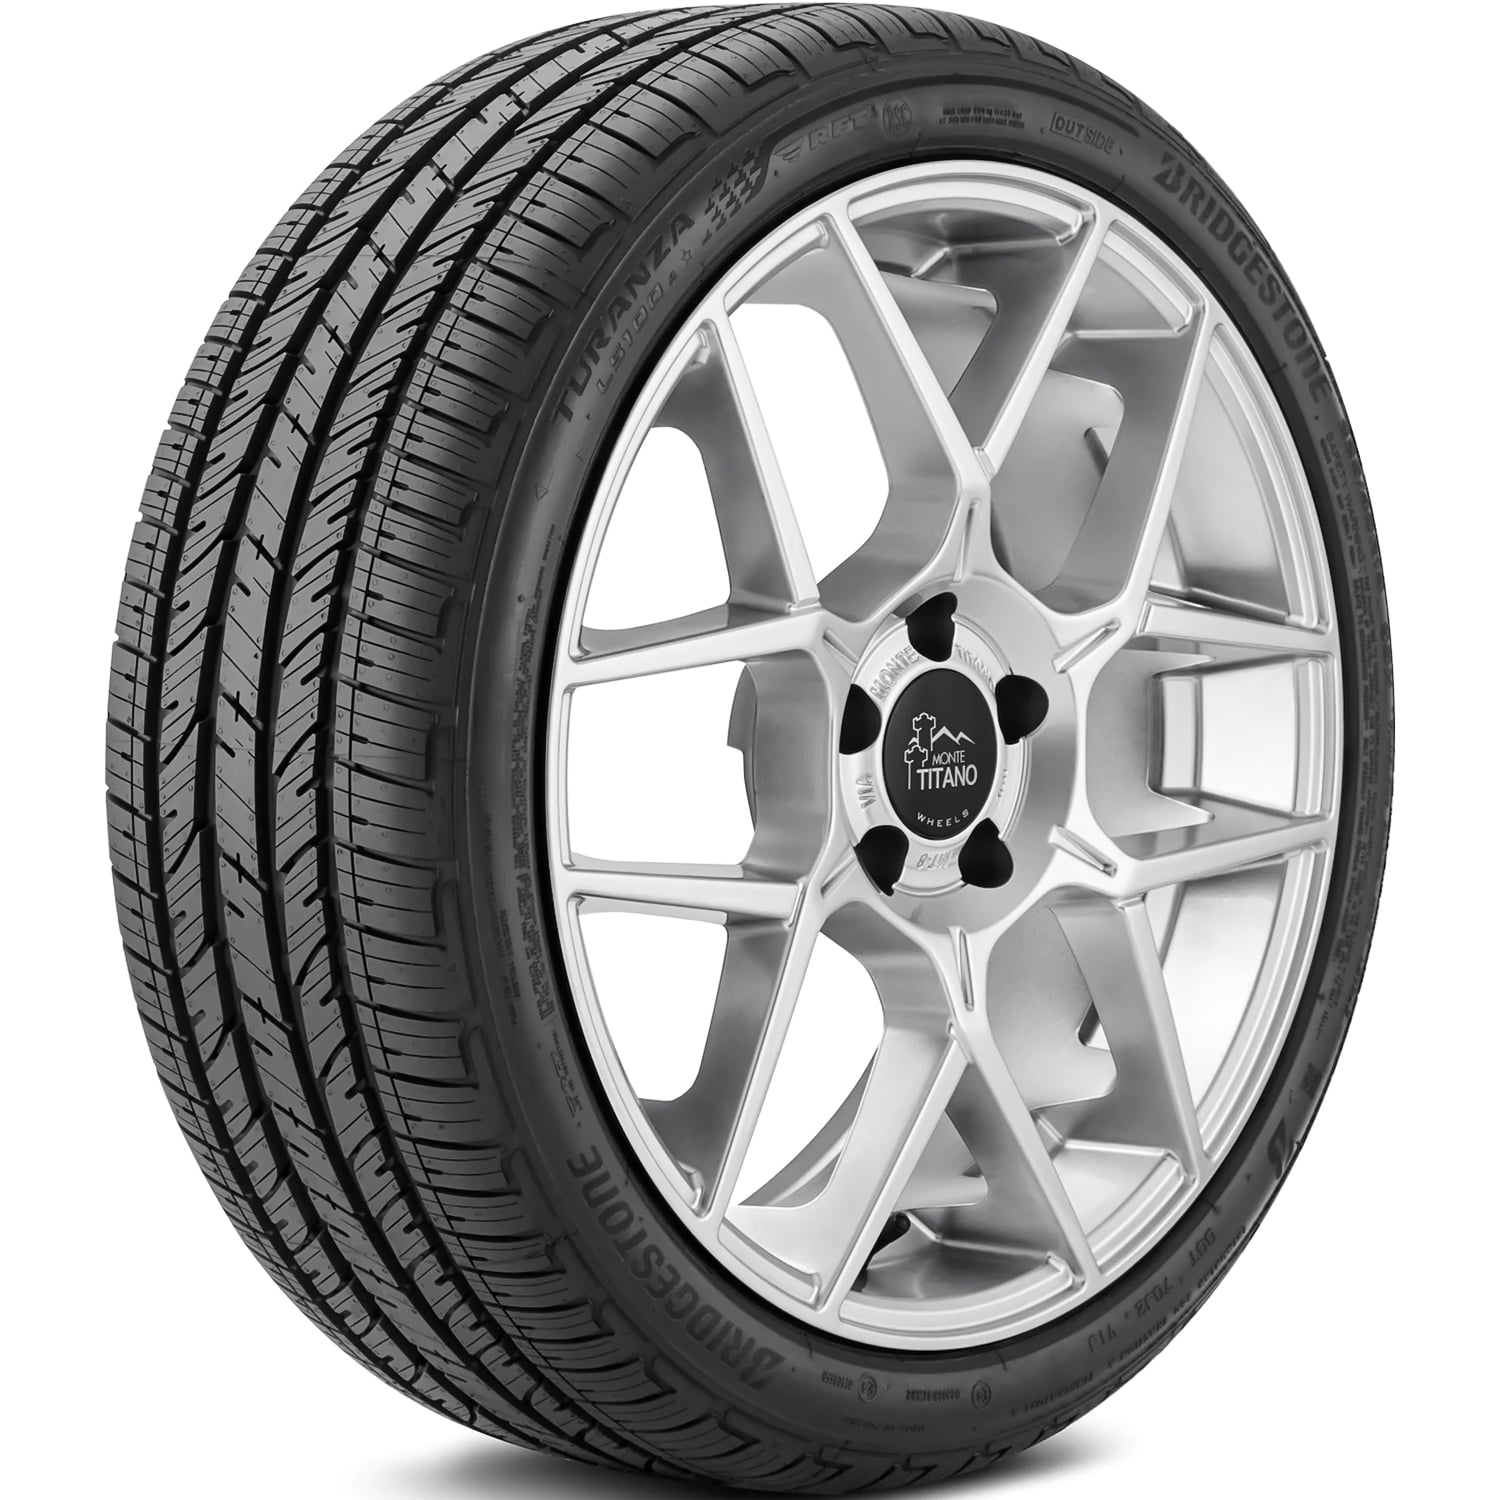 Bridgestone Turanza LS100 A RFT 225/45R18 91H (MOE) All Season Run Flat  Tire | Autoreifen